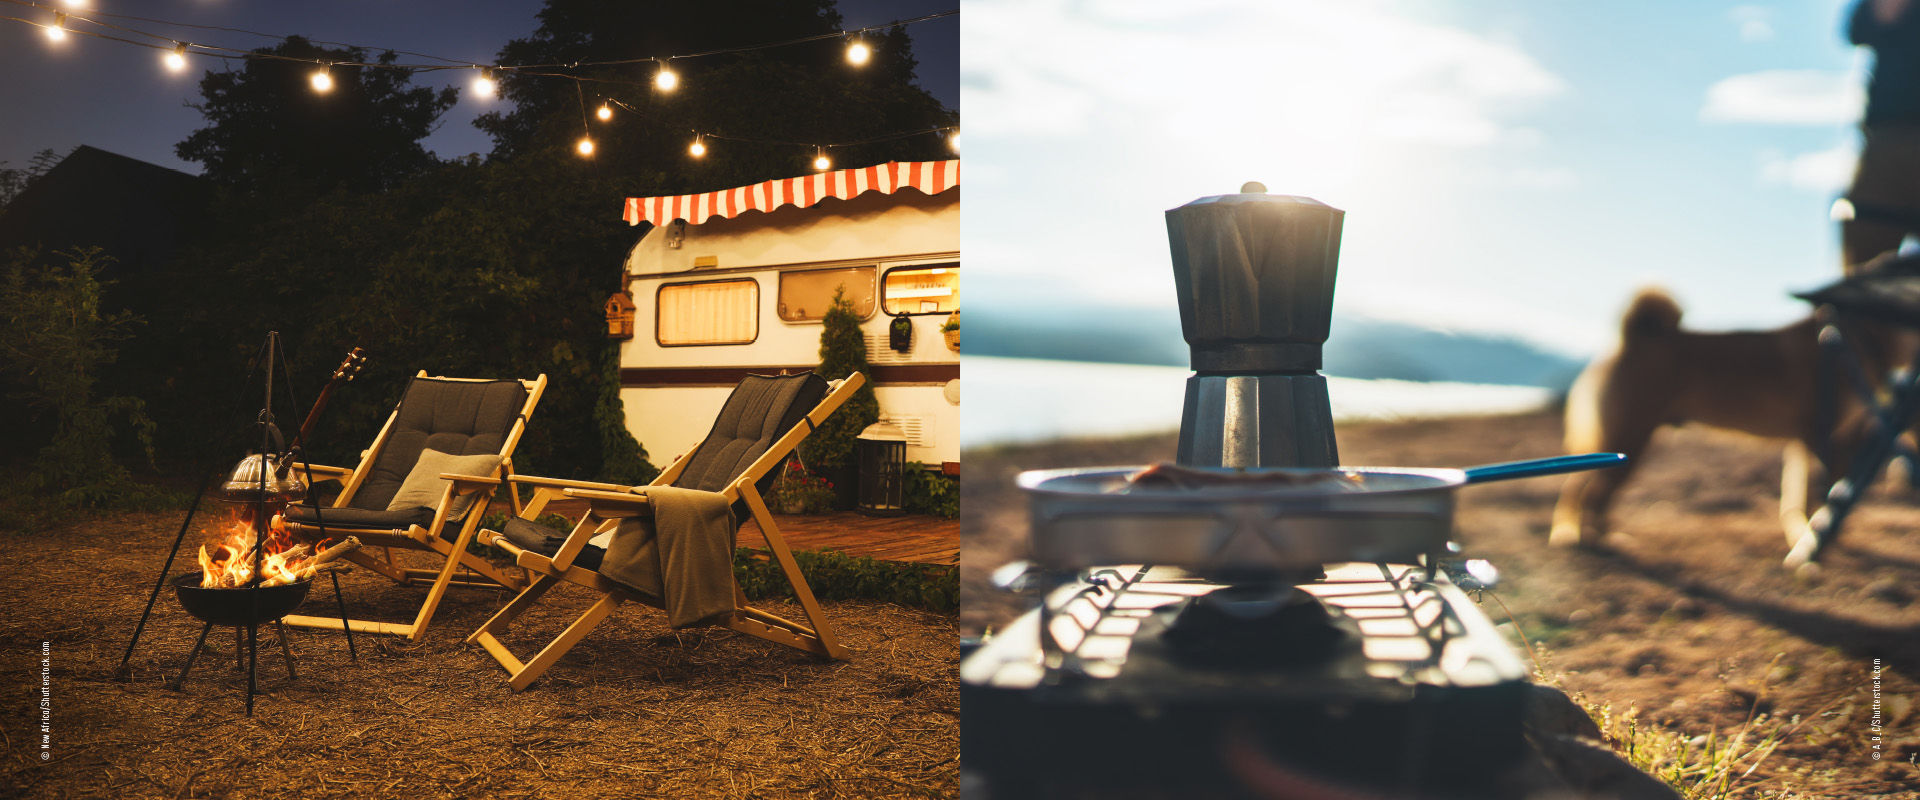 Camping und Vanlife - Outdoorküche